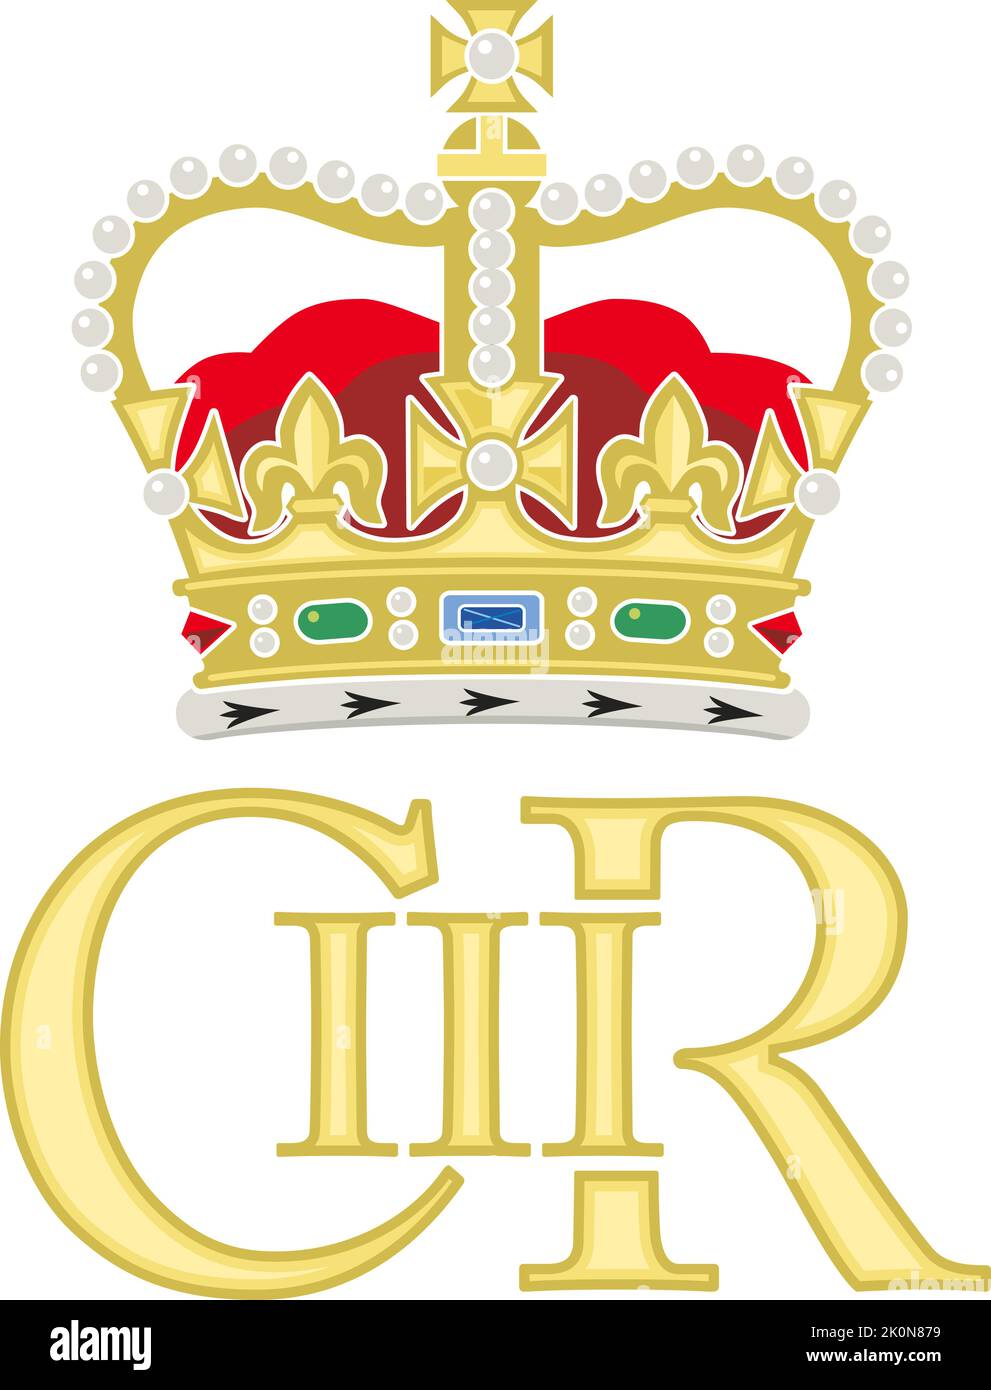 Charles III King of United Kingdom, coronation 2022, portrait silhouette and monogram, vector illustration Stock Vector